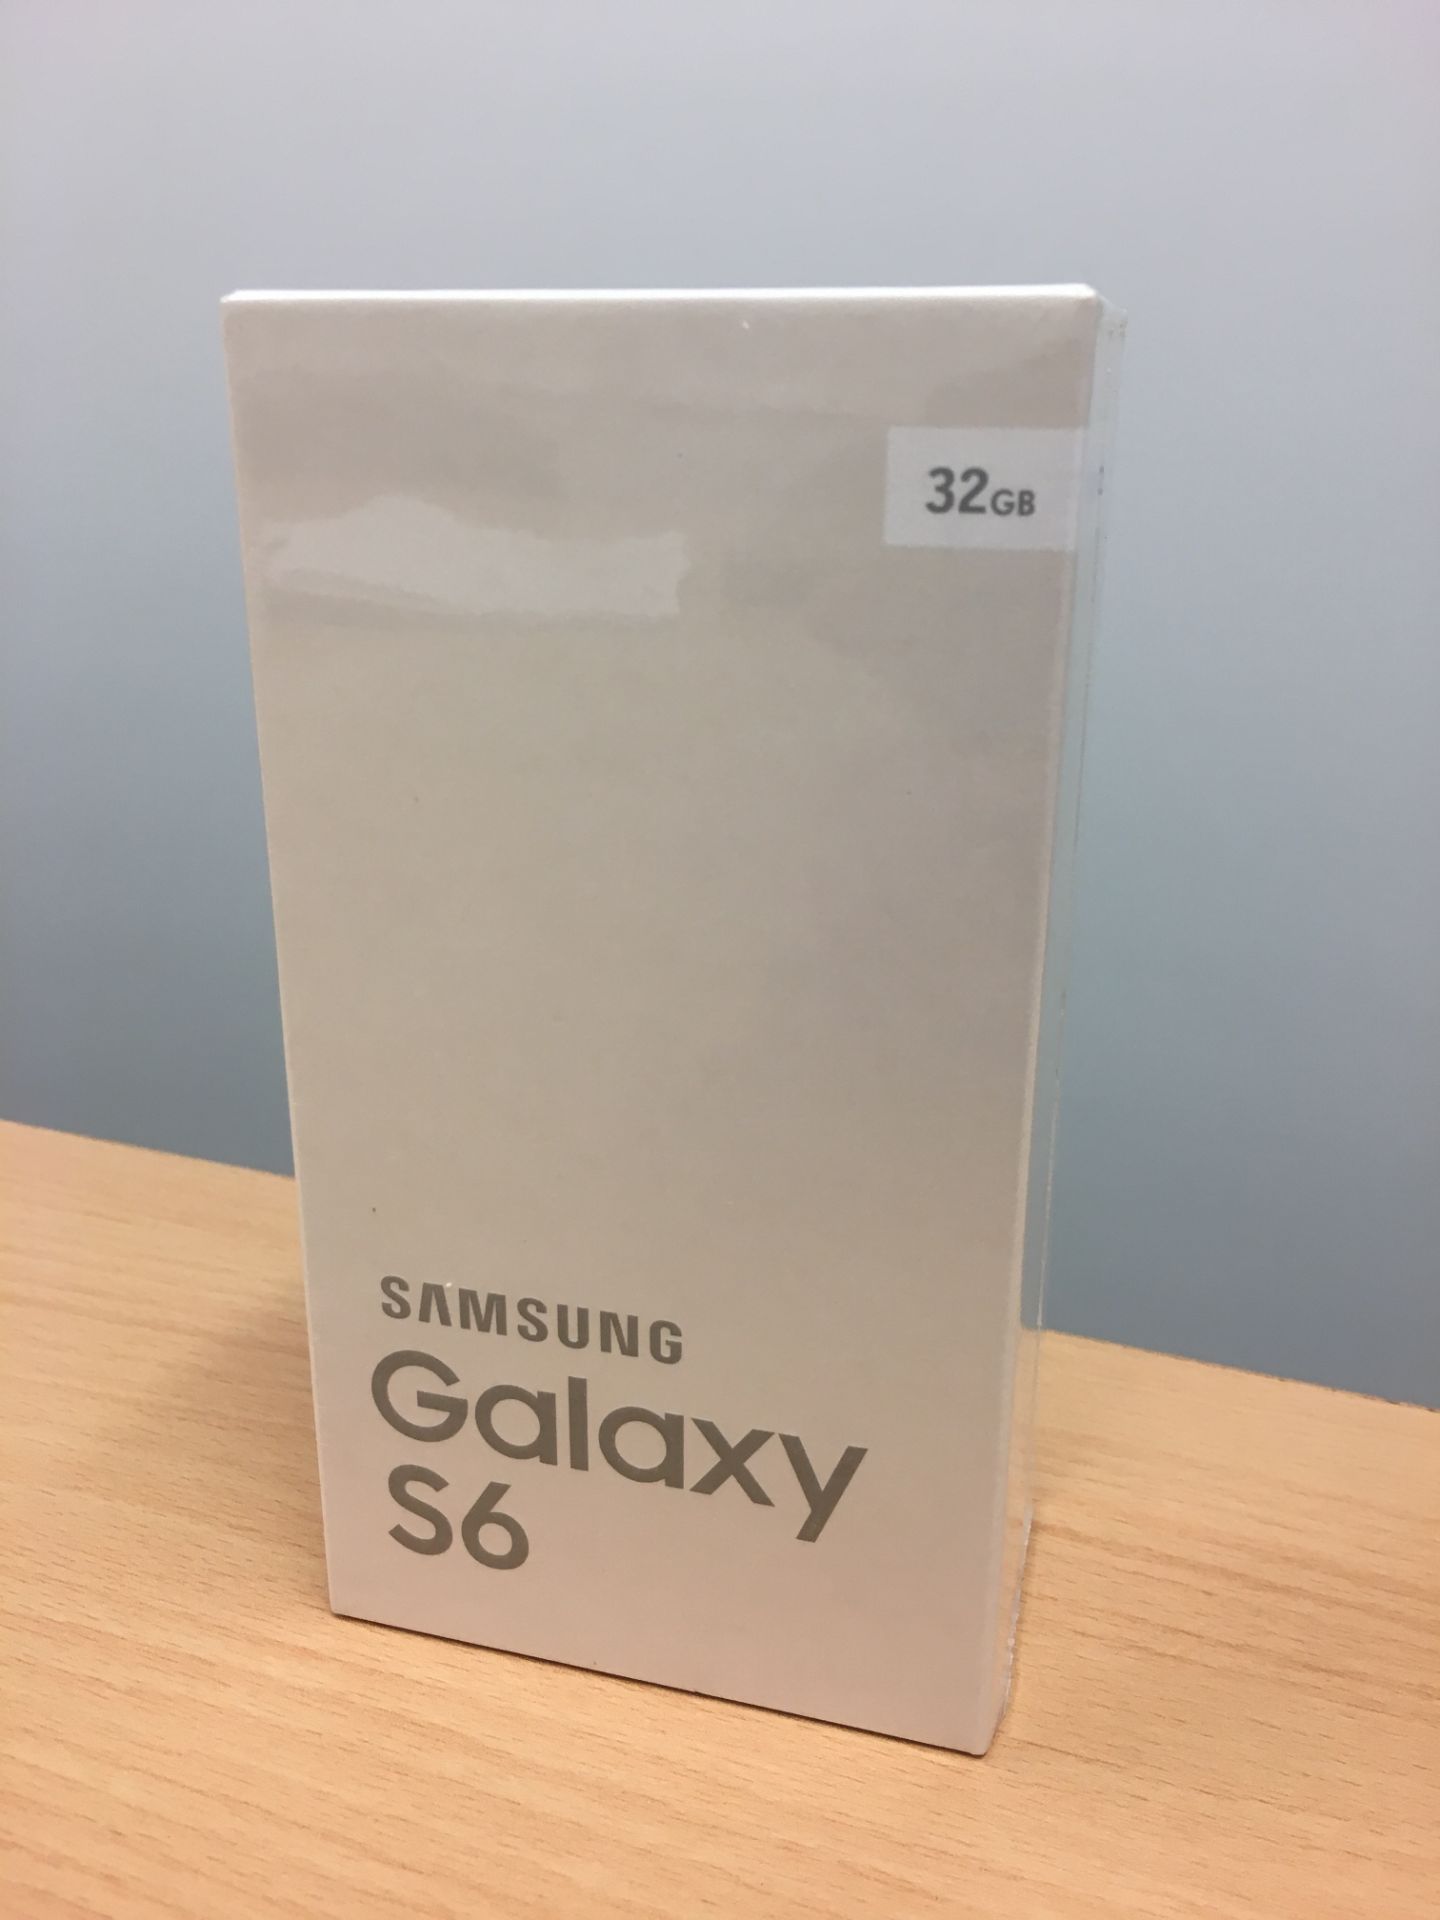 Grade A Samsung Galaxy S6 Phone - 16MP Camera - 5.1" Screen - Boxed - Colours May Vary - Available - Image 3 of 3